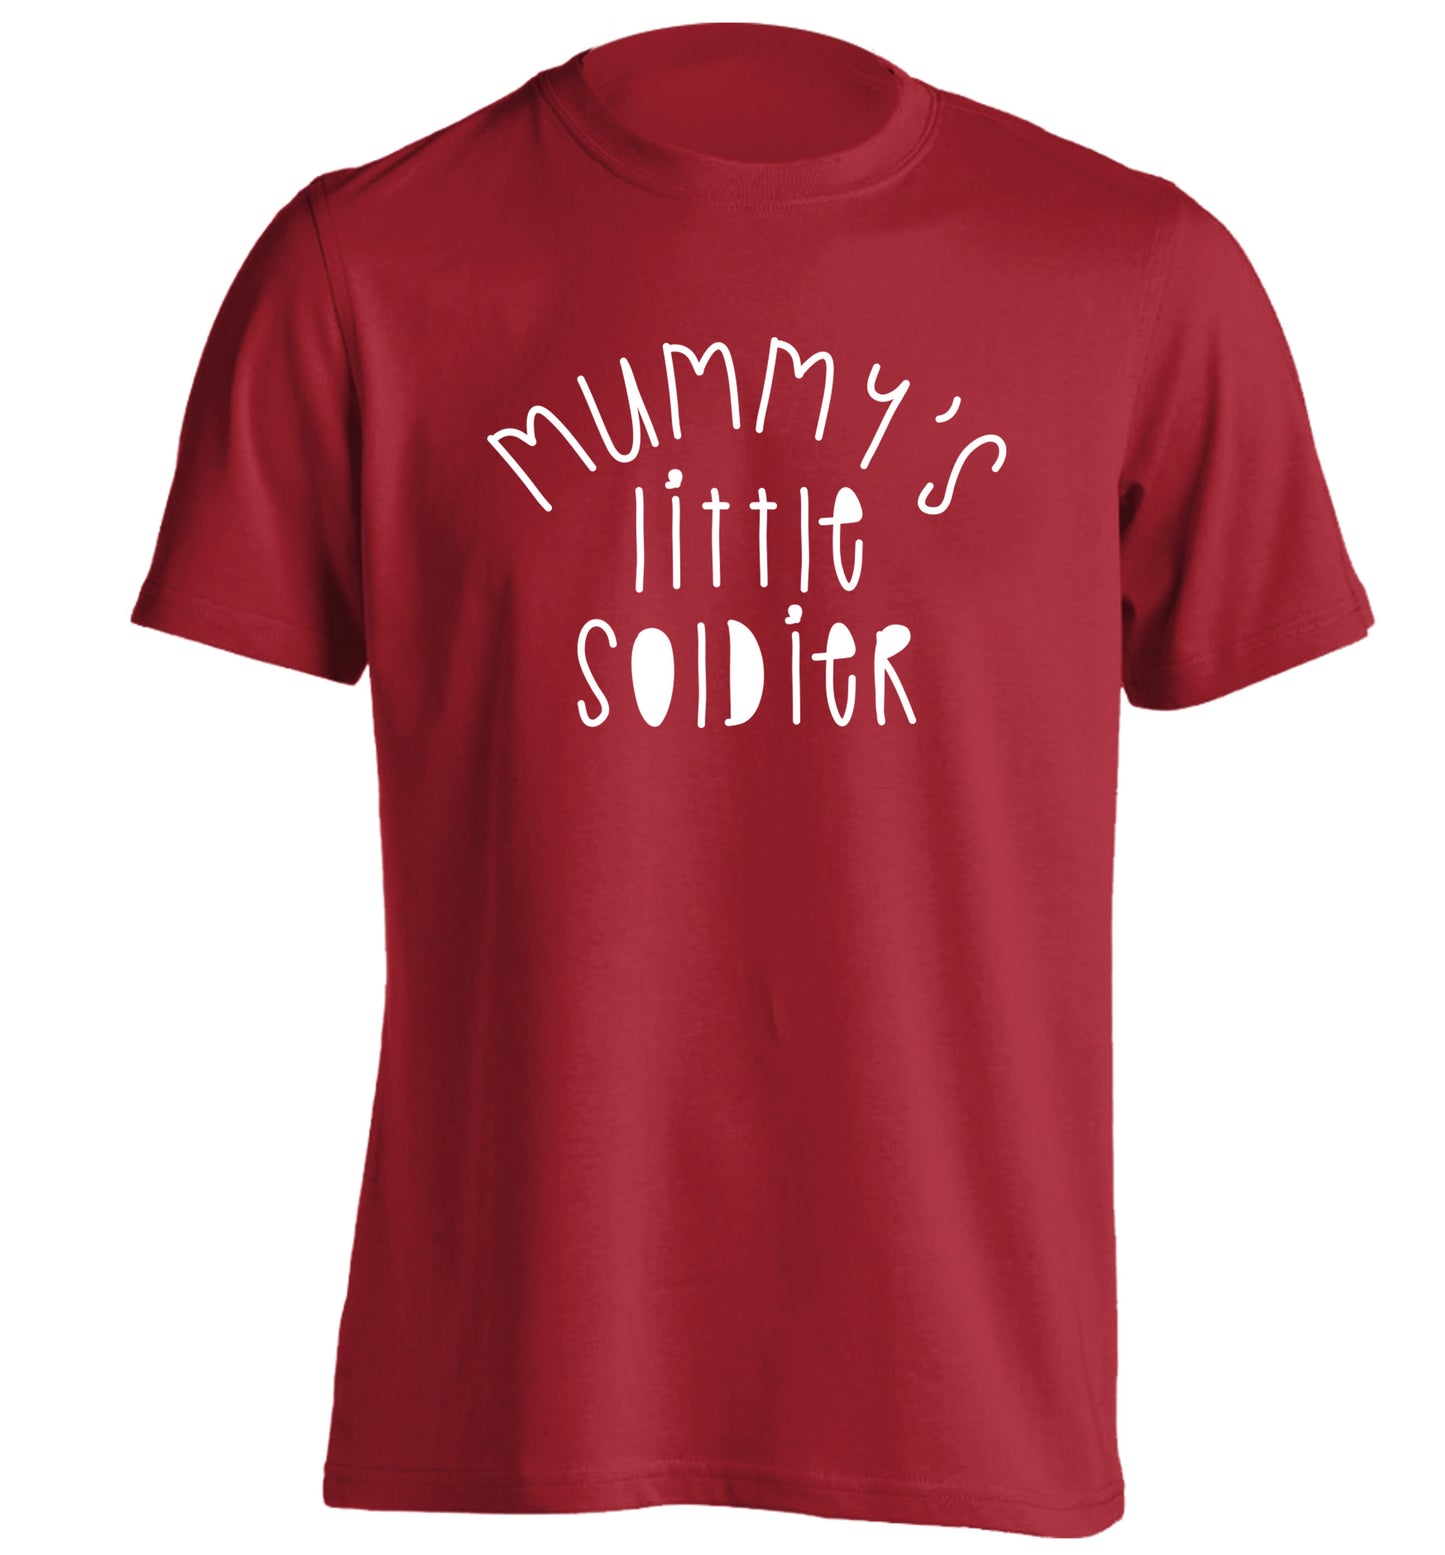 Mummy's little soldier adults unisex red Tshirt 2XL